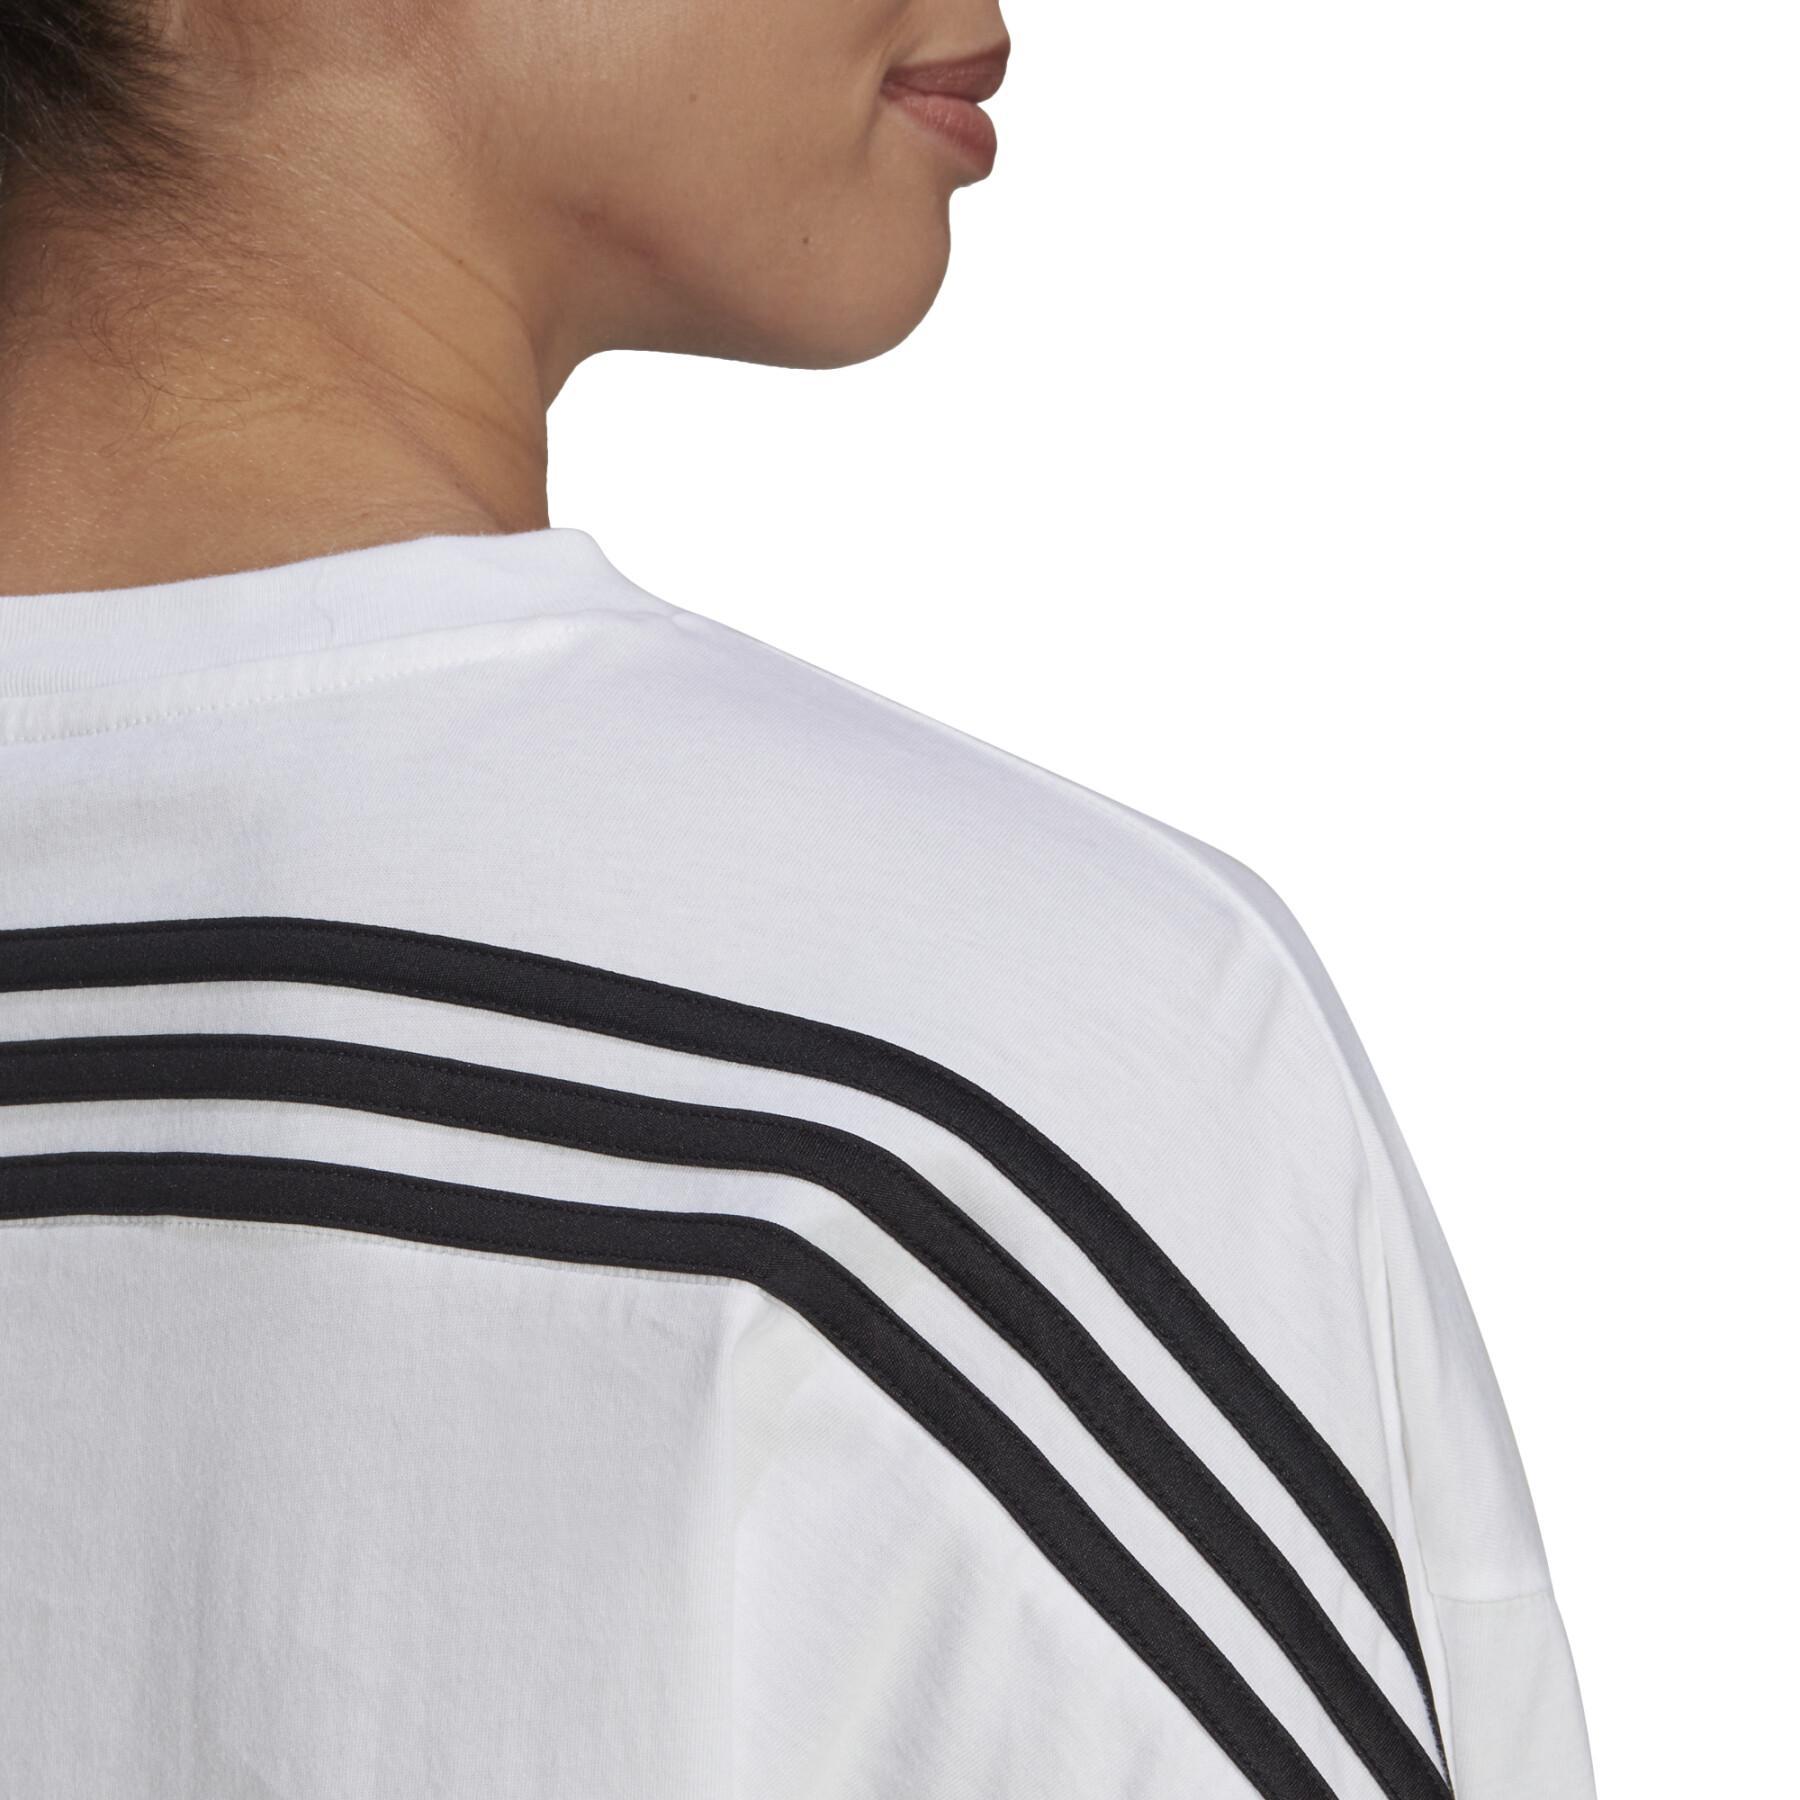 Women's swimsuit adidas future icons 3-stripes